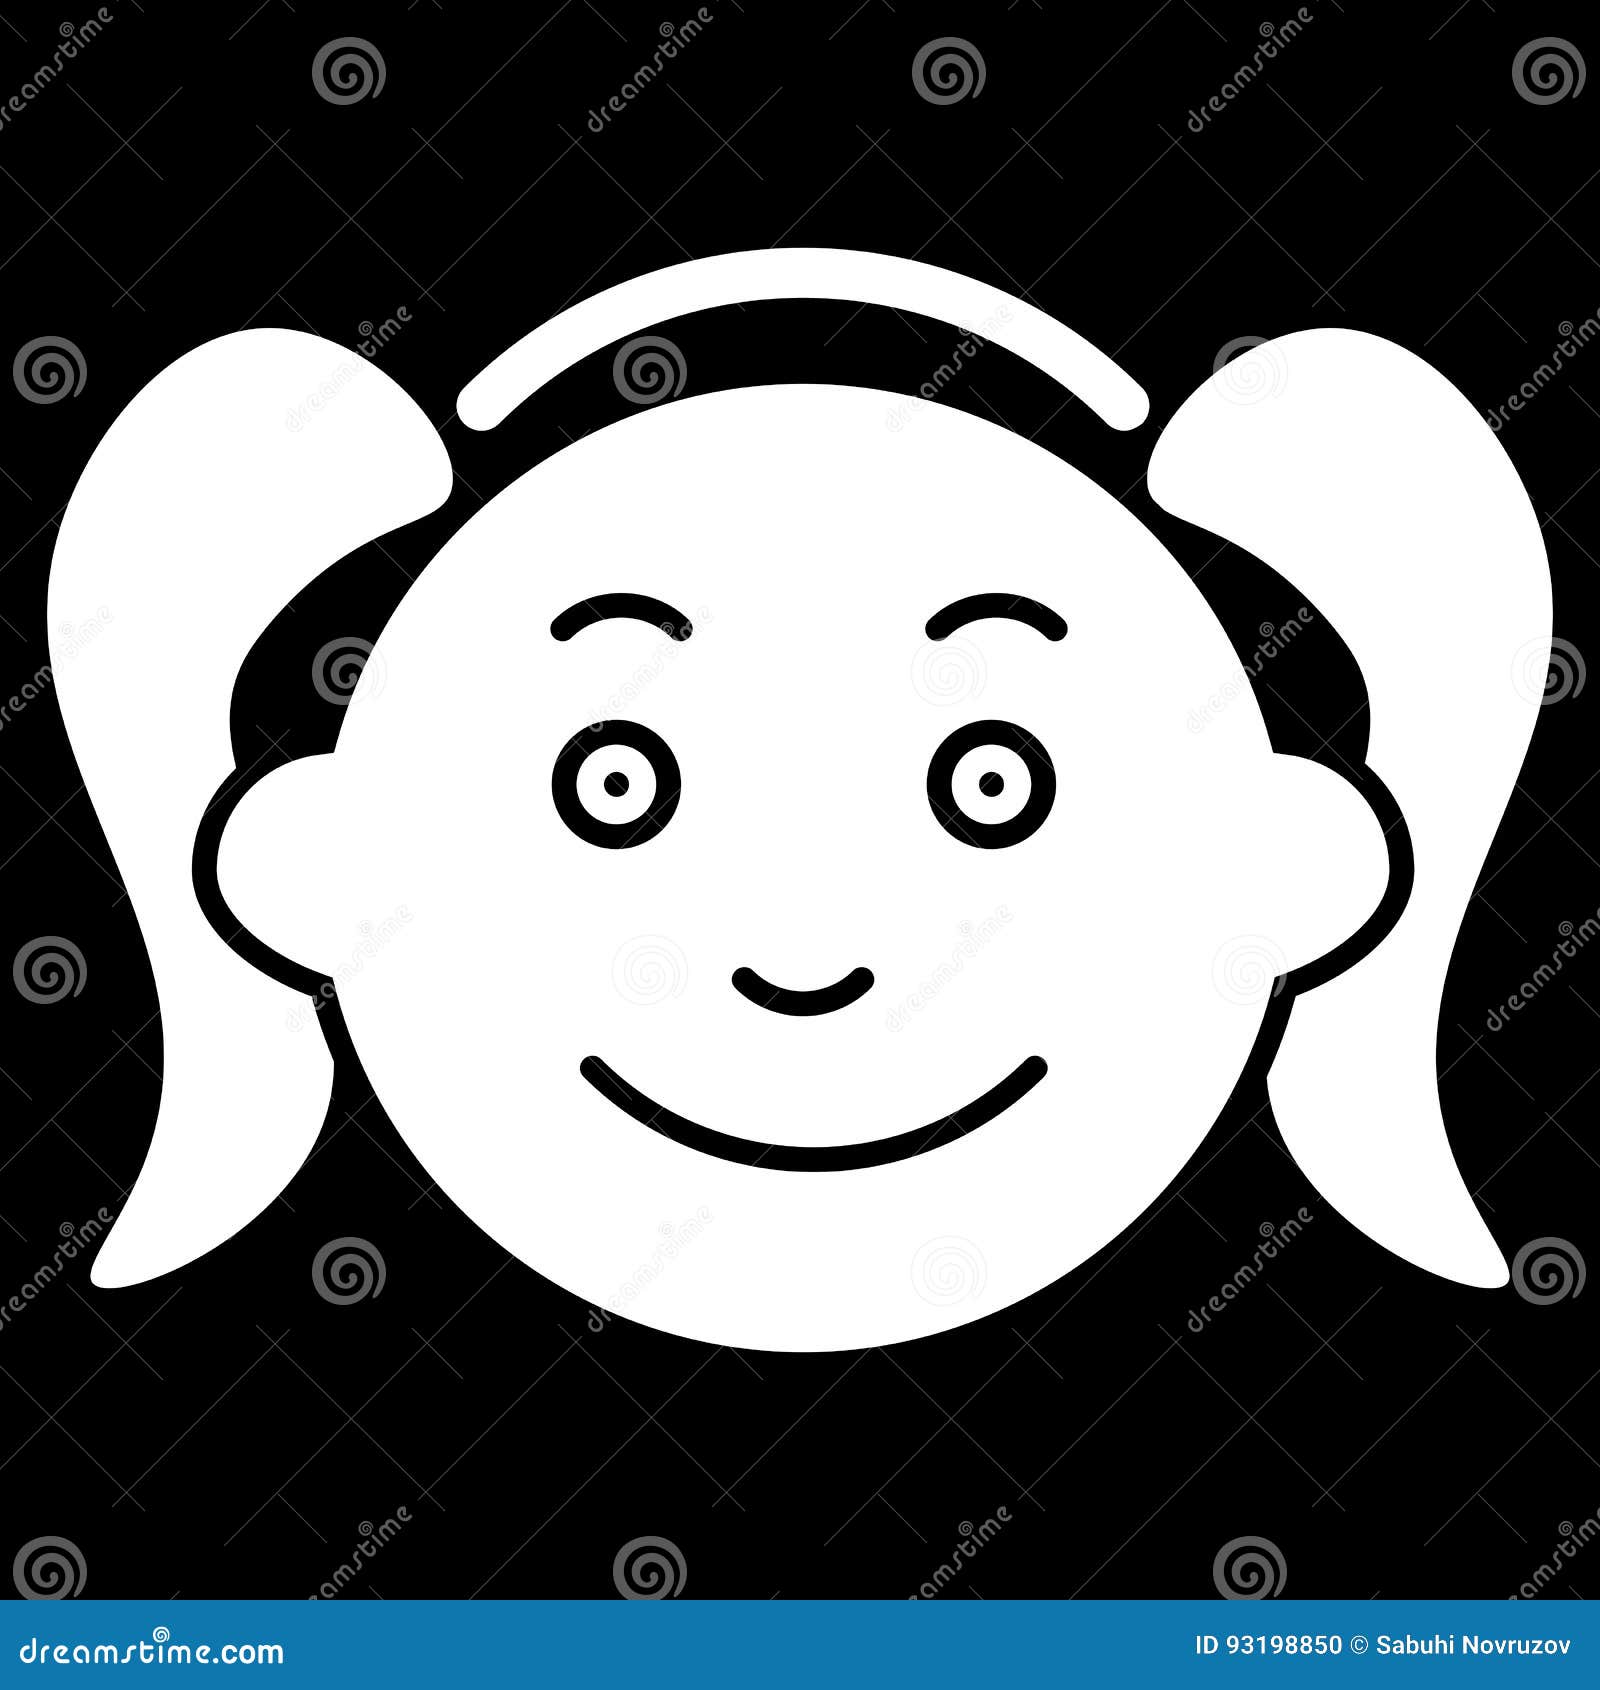 Girl Vector Icon. Black and White Funny Little Girl Face Illustration ...